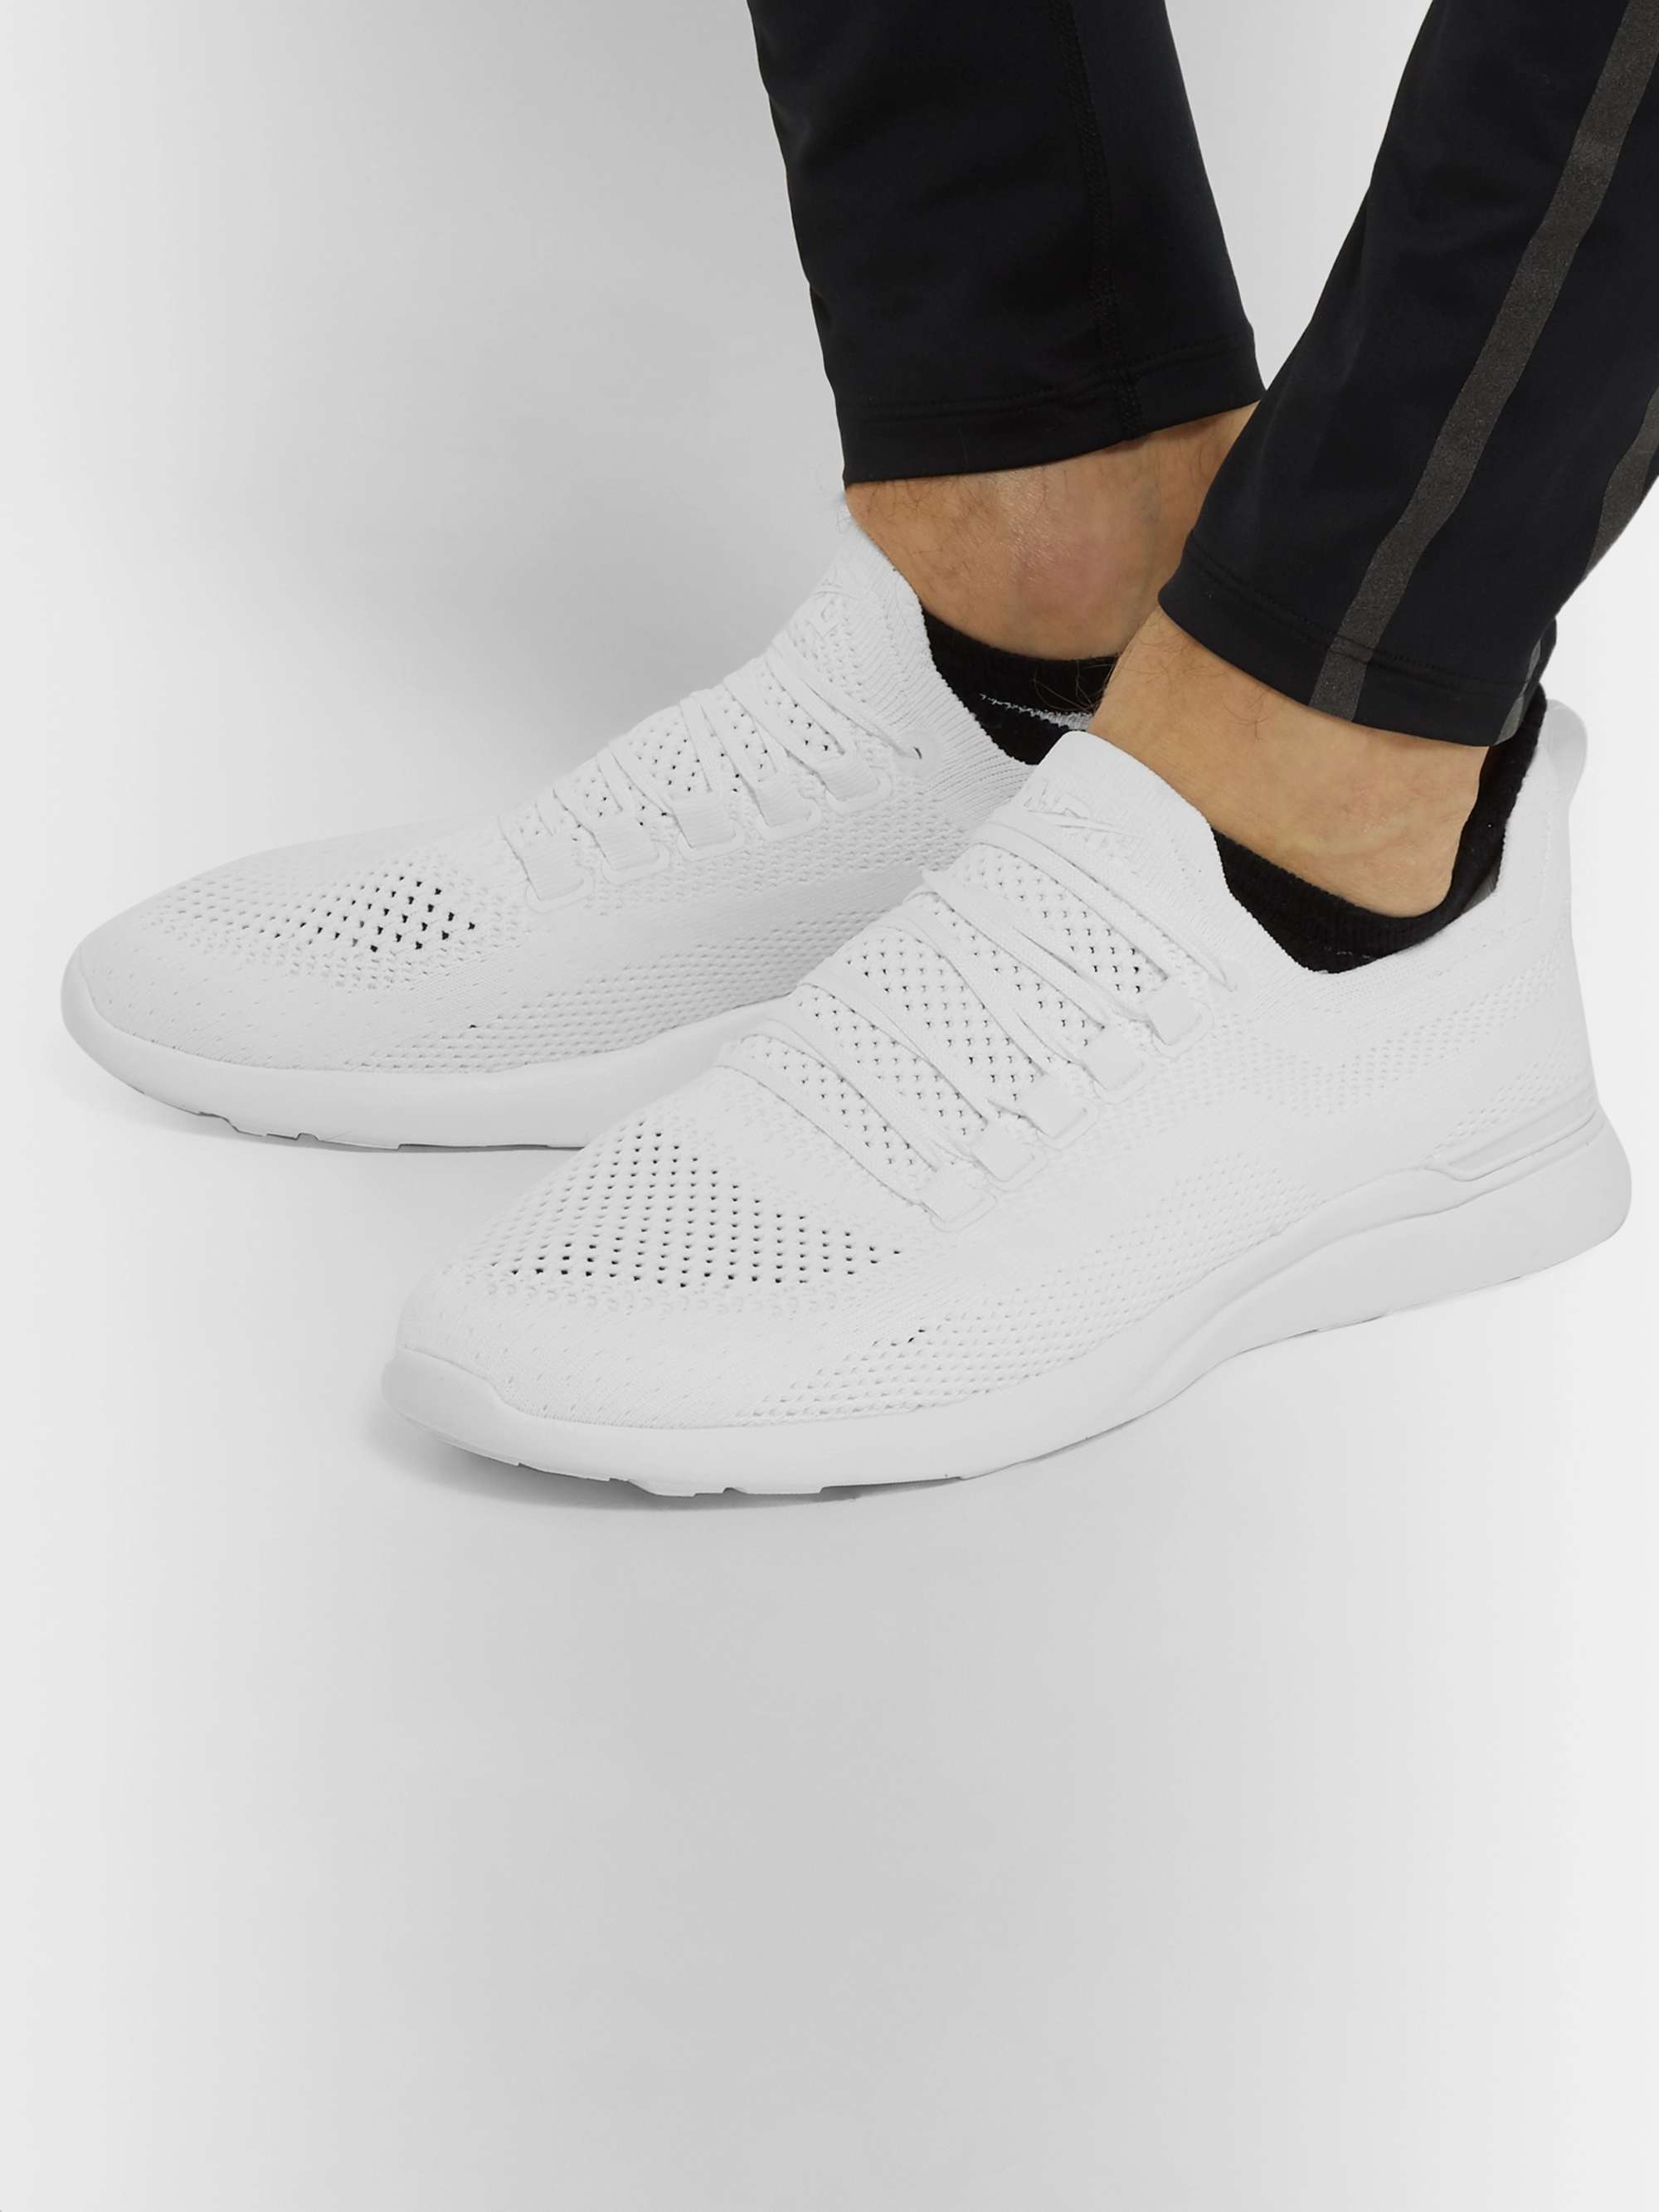 APL ATHLETIC PROPULSION LABS حذاء سنيكرز للركض Breeze من قماش TechLoom